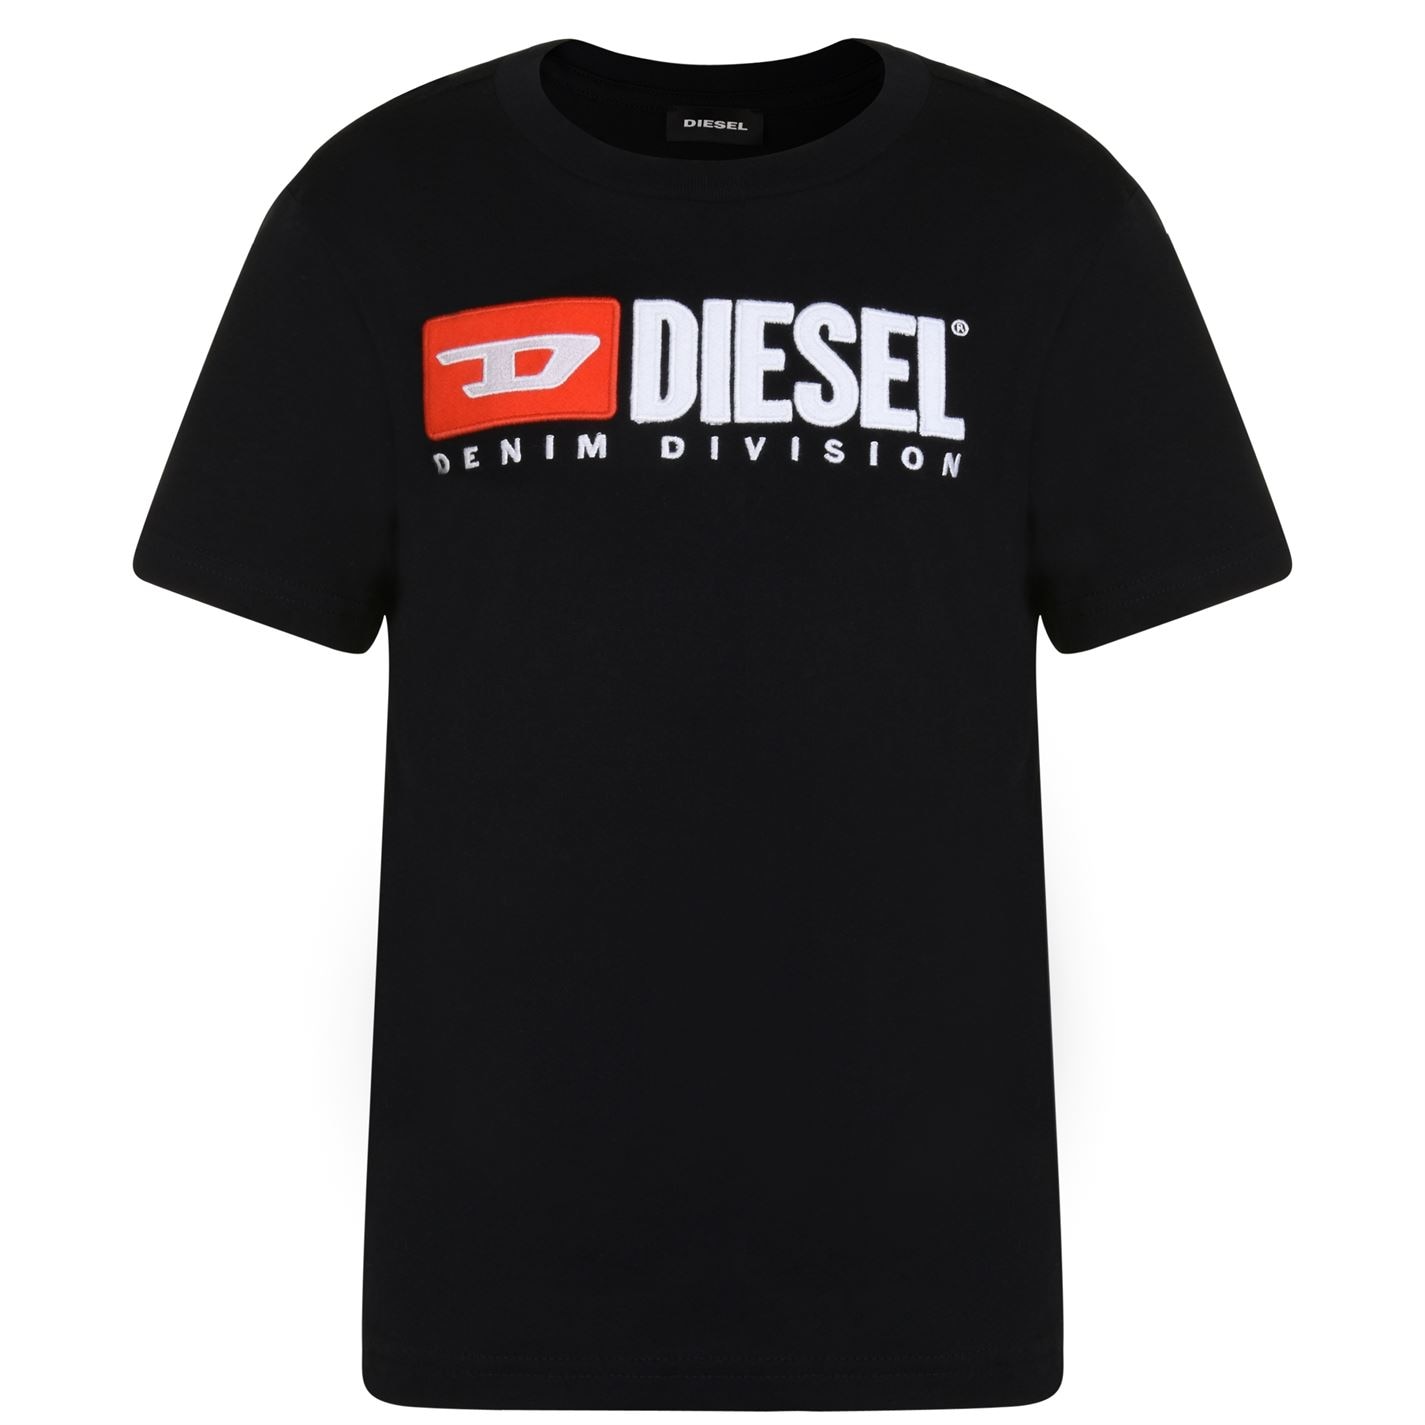 Spicy Rich man principle Chlapecké tričko Diesel Division